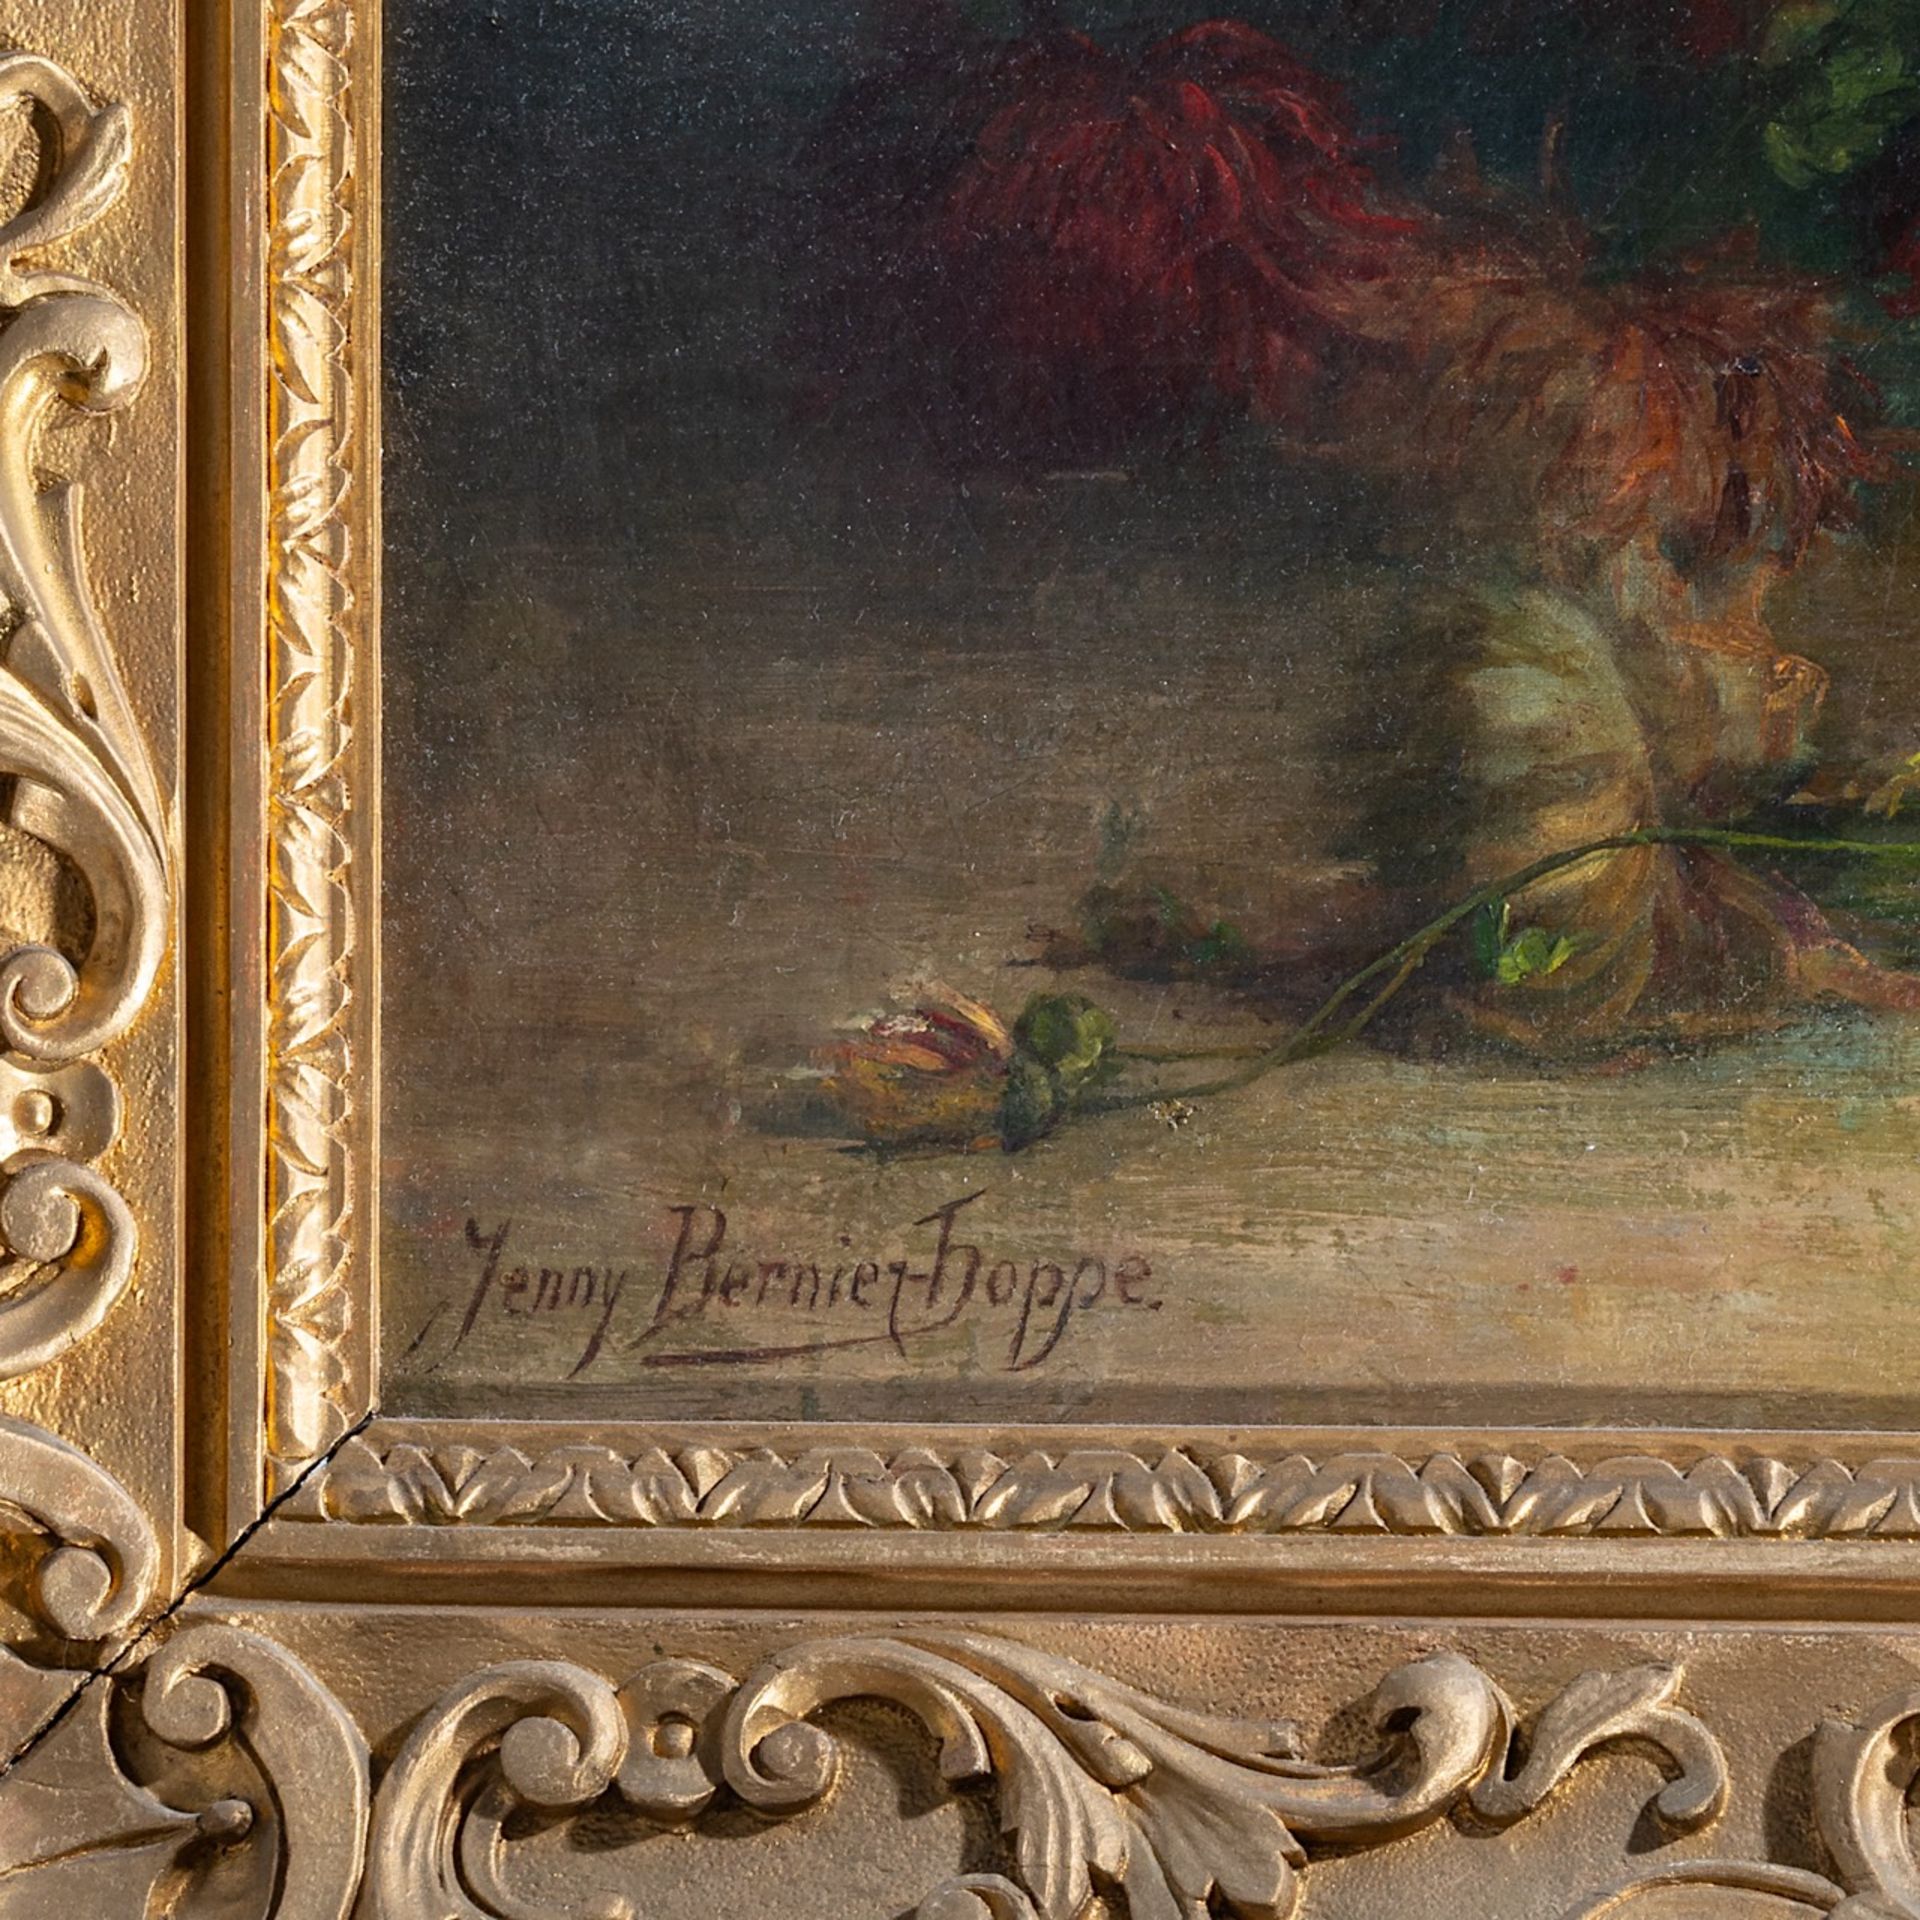 Jenny Bernier-Hoppe (1870-1934), flower still life, oil on canvas 65 x 105 cm. (25.5 x 41.3 in.), Fr - Bild 4 aus 6